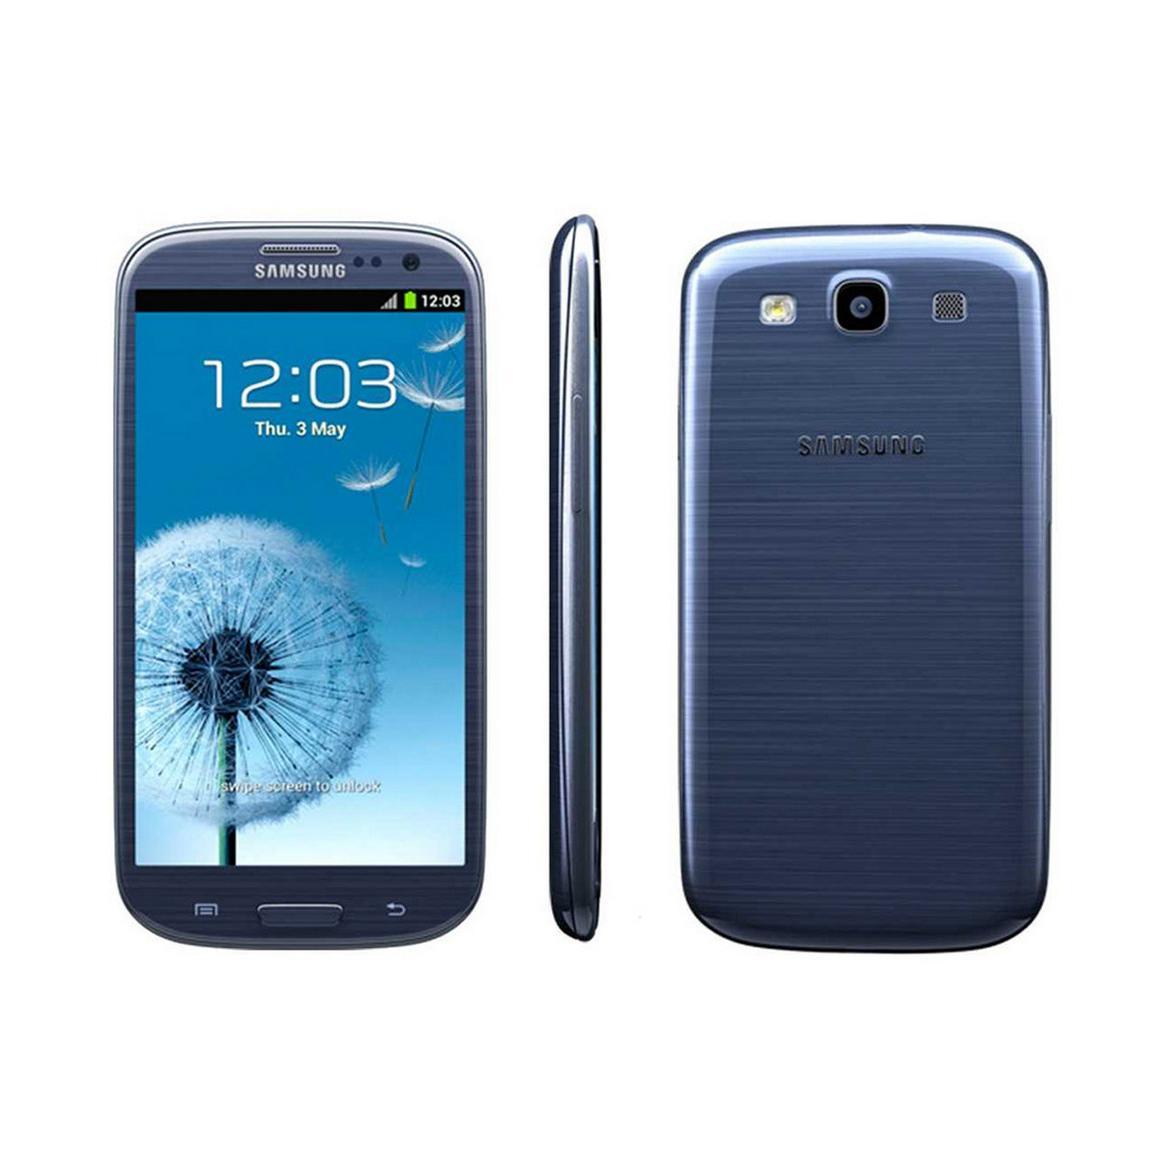 Звука телефоне самсунг галакси. Samsung Galaxy s3. Samsung Galaxy s3 GB. Самсунг галакси а 16. Samsung Galaxy s4 us Cellular.